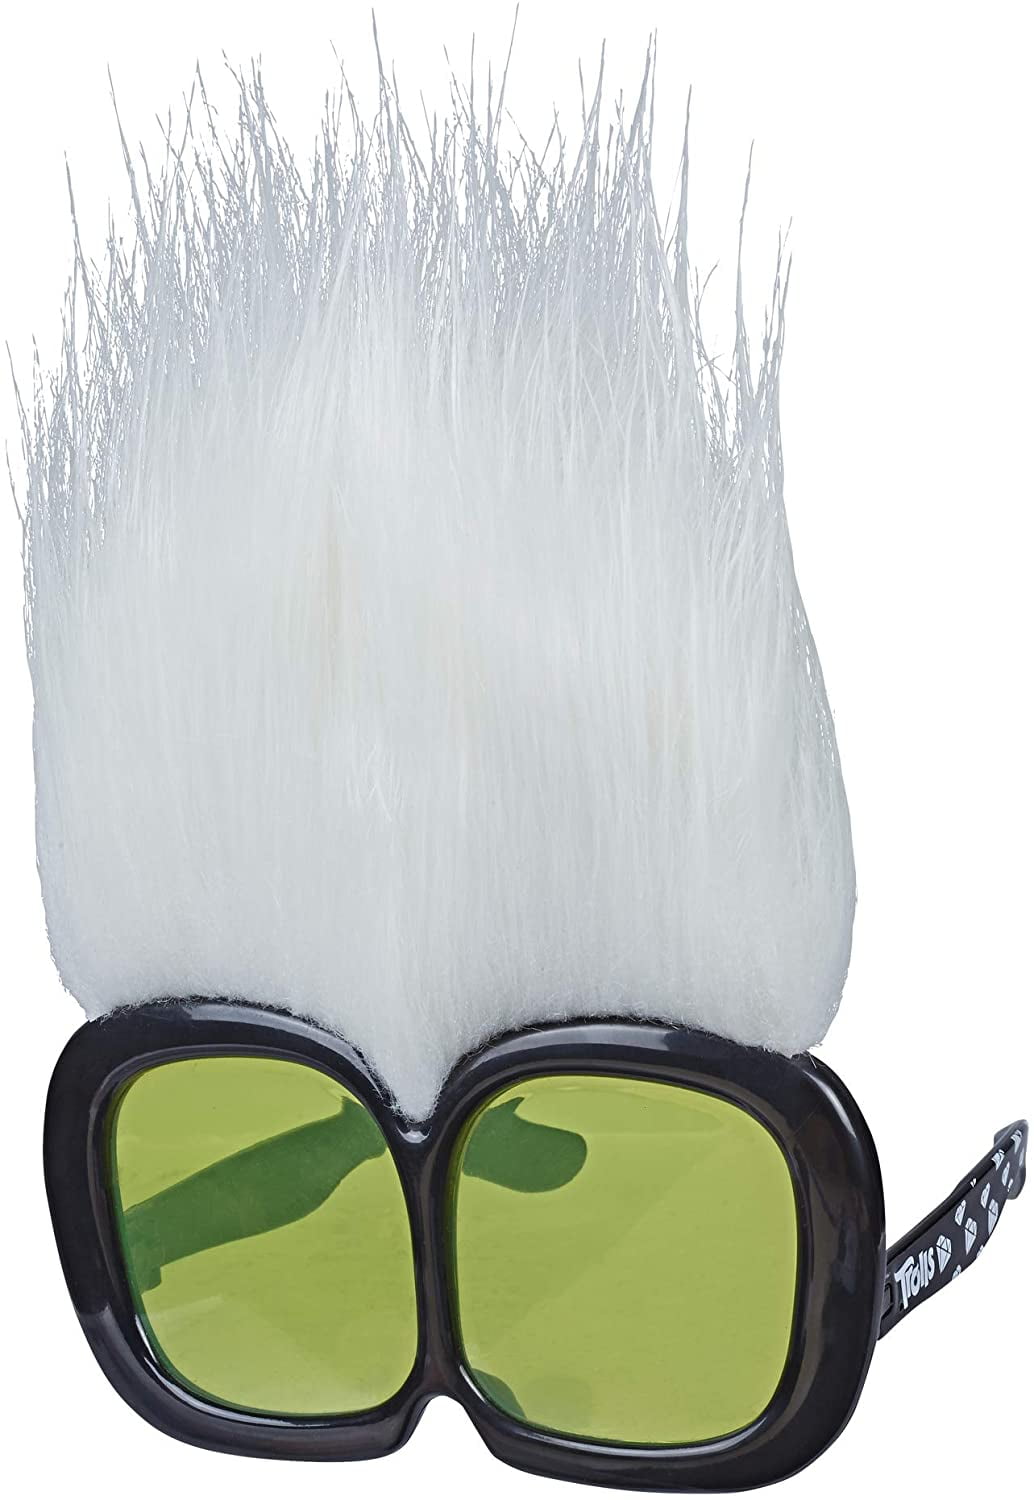 TROLLS PRINCESS POPPY Girls 100% UV Shatter Resistant Costume Sunglasses NWT $13 